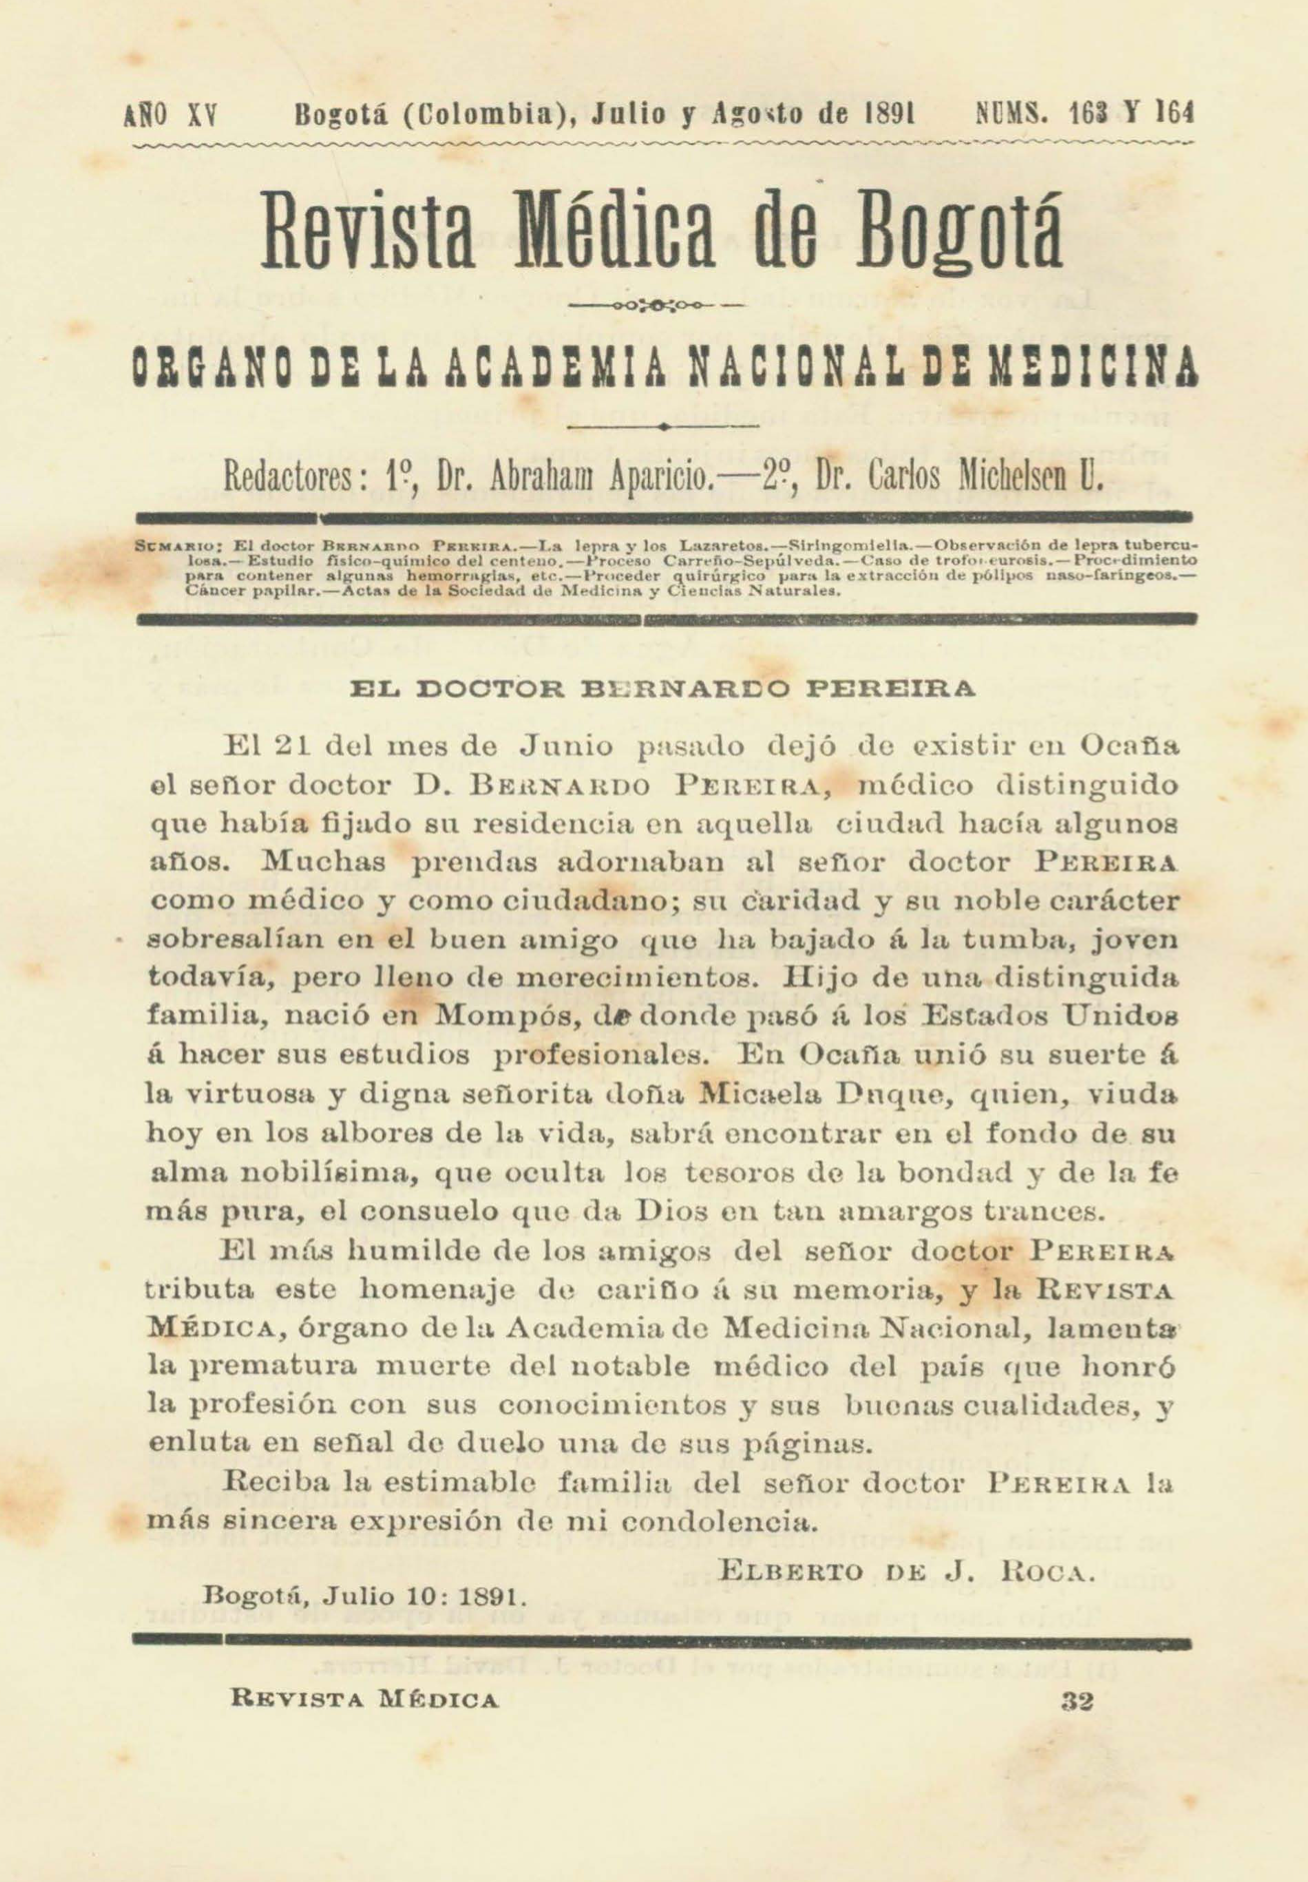 					Ver Vol. 15 Núm. 163-164 (1891): Revista Médica de Bogotá. Serie 15. julio y Agosto de 1891. Núm. 163-164
				